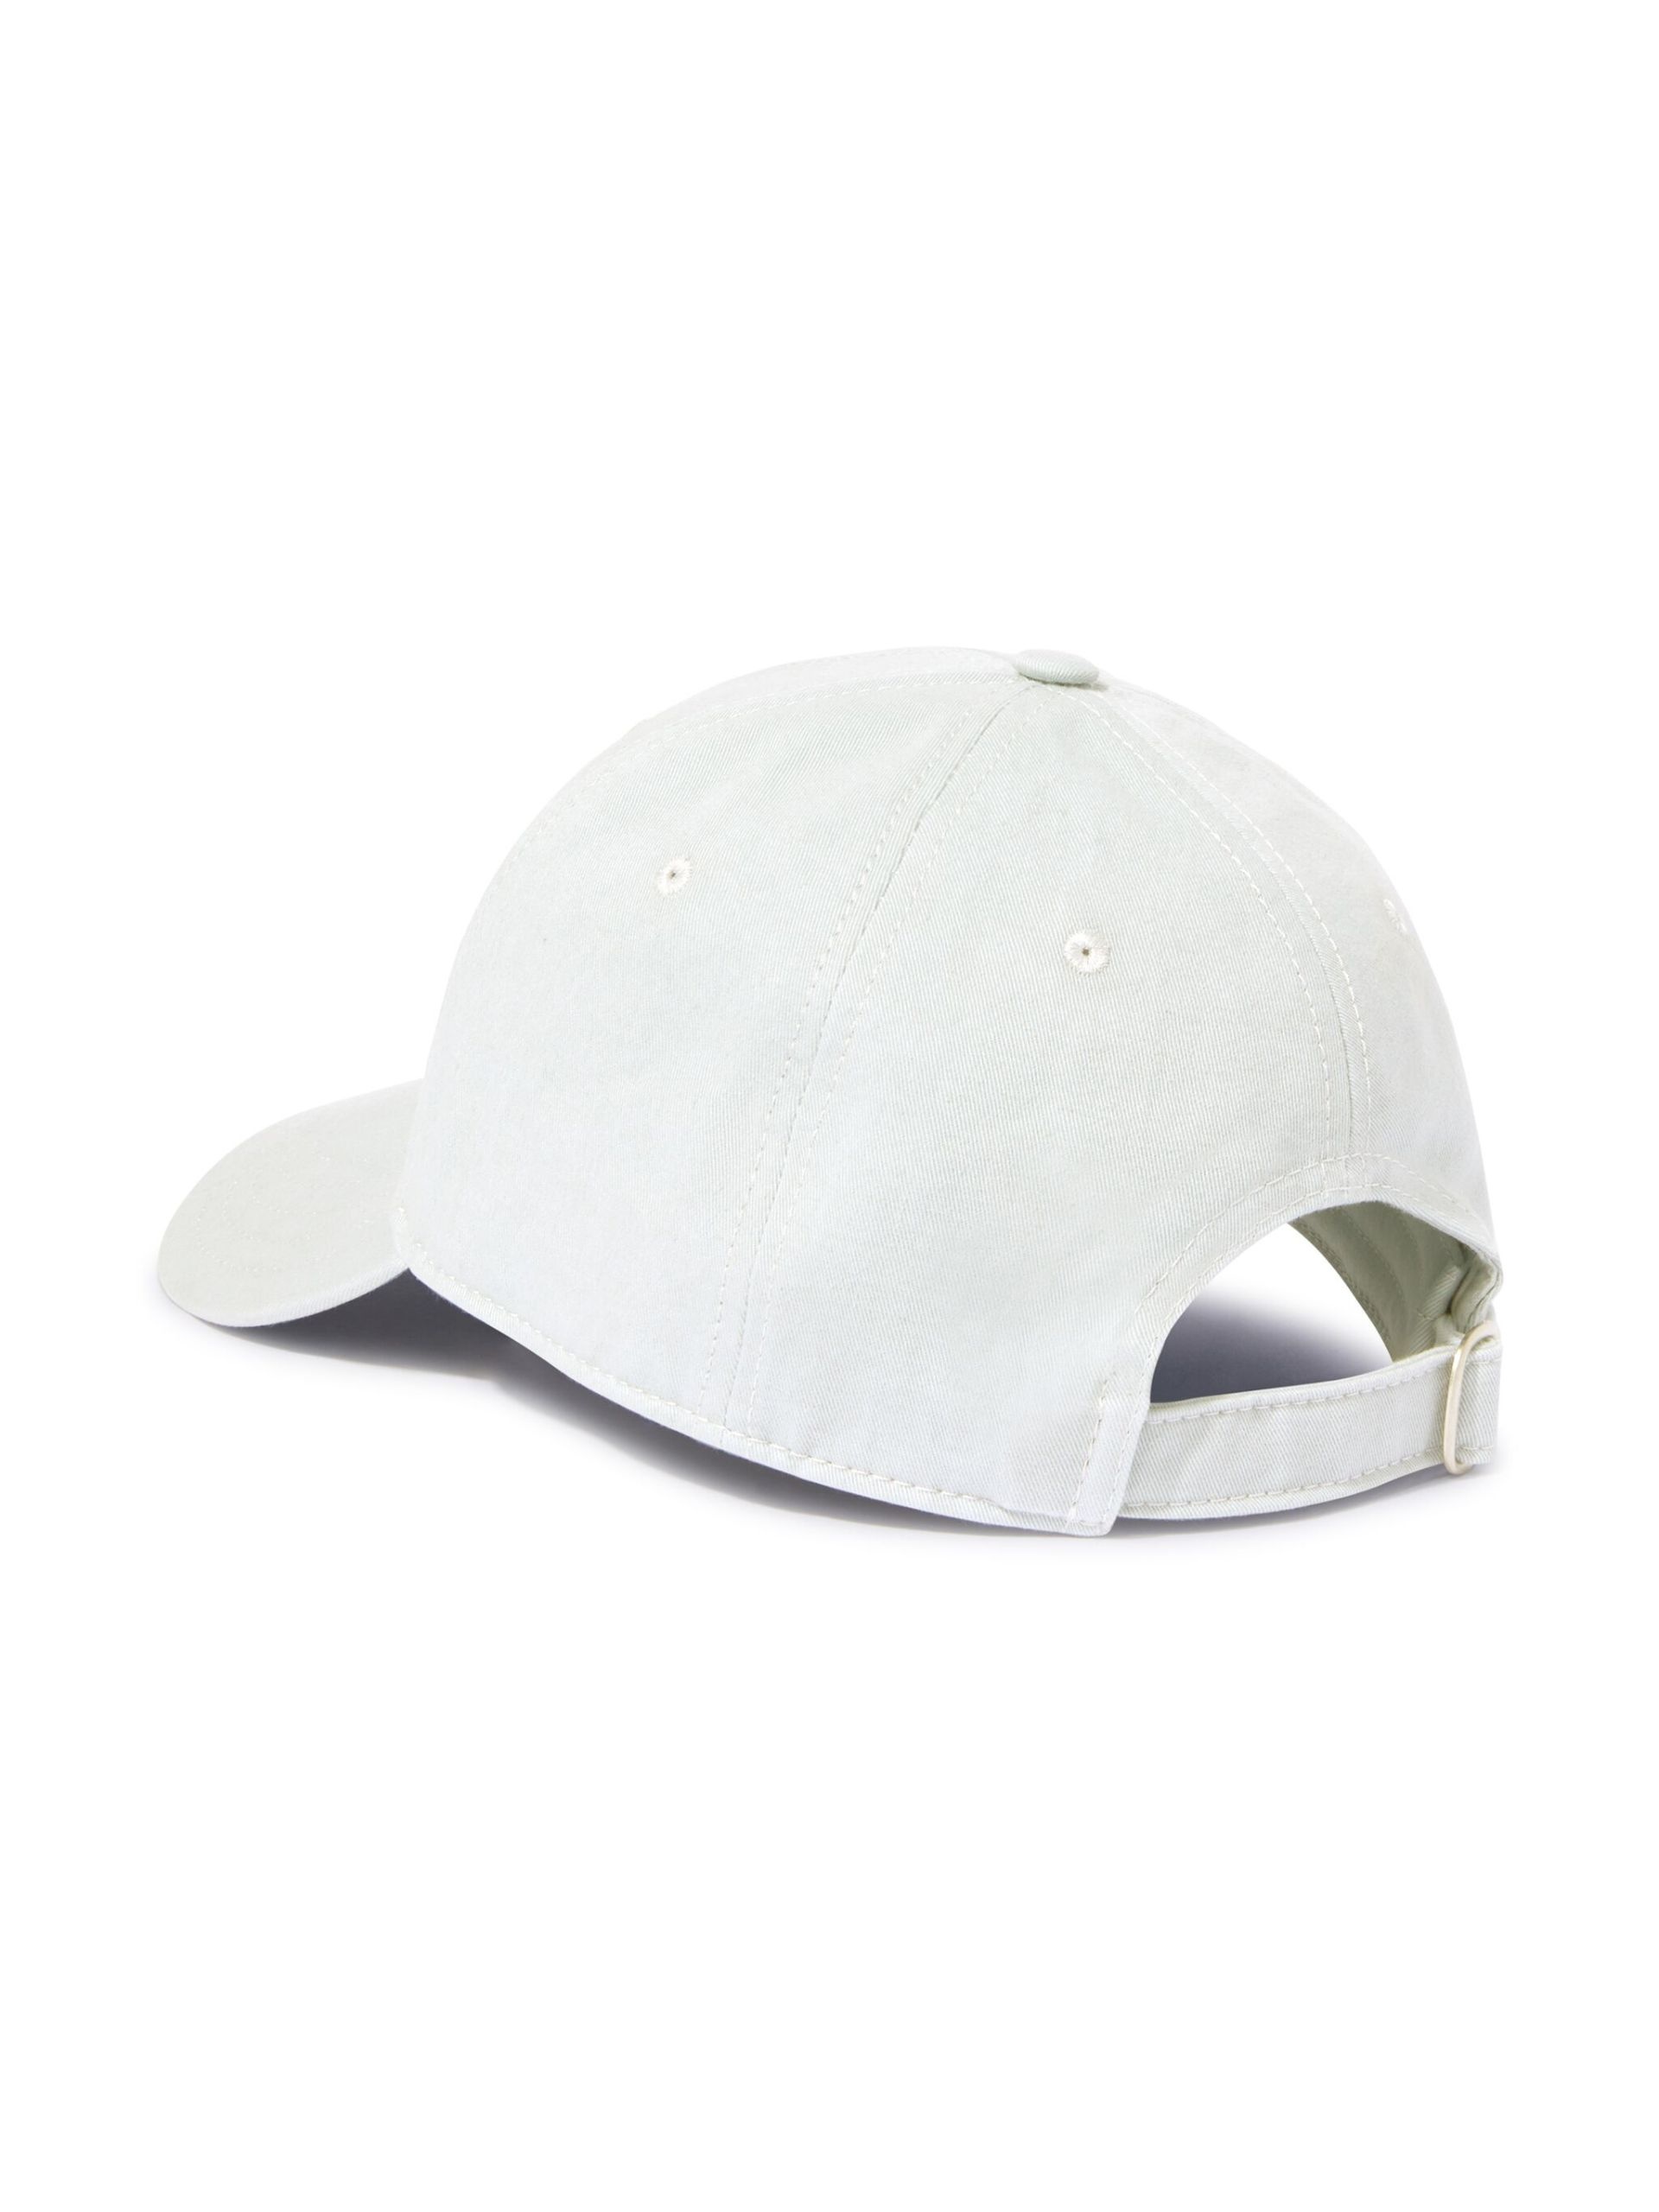 White Arrow Baseball Cap - 2